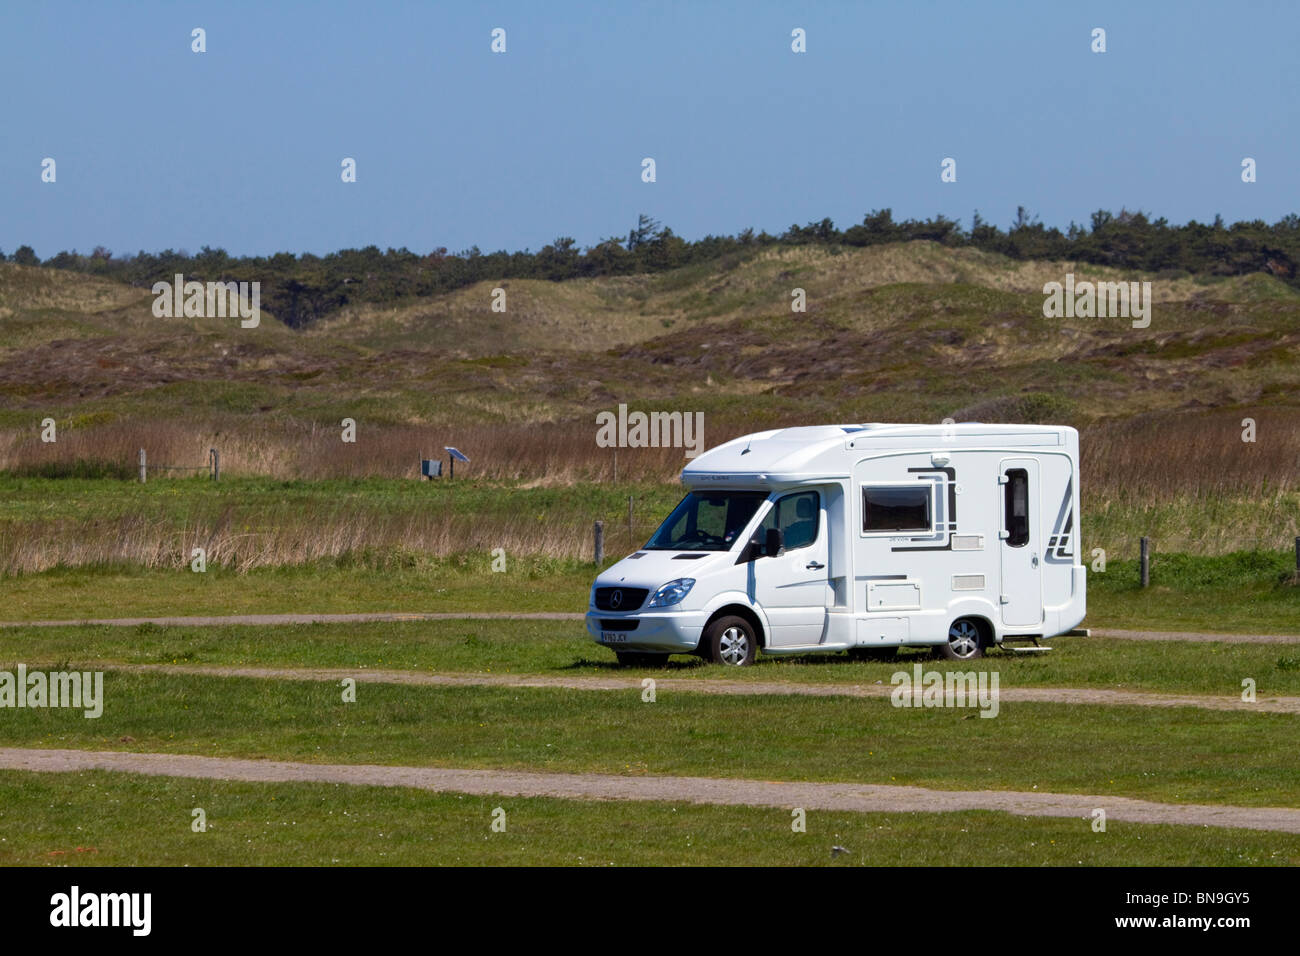 Le camping-car garé à Jan Ayeslag ; Texel, Pays-Bas camping-van appartient  au photographe Photo Stock - Alamy